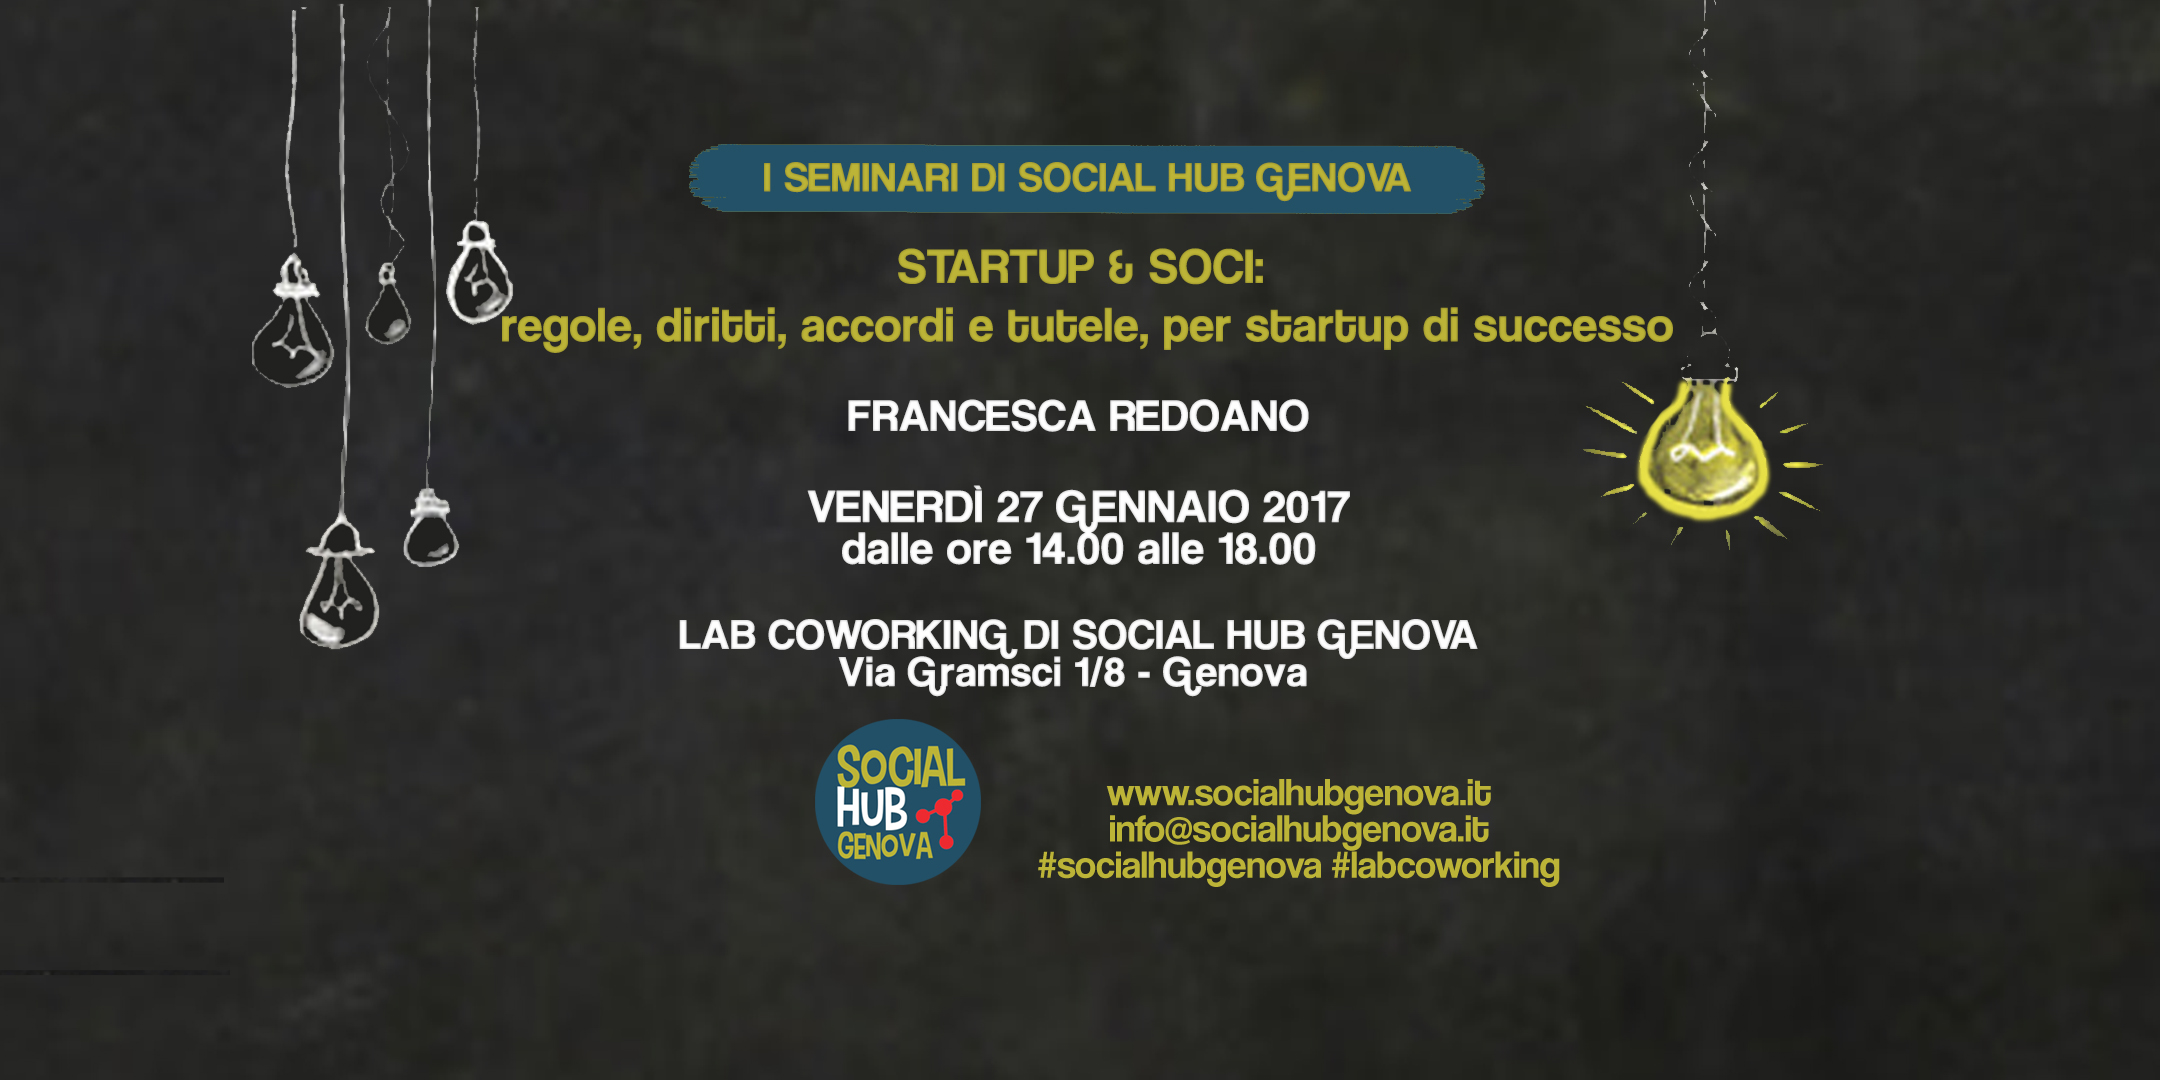 20170127_seminario_francesca-redoano_eventbrite-fb